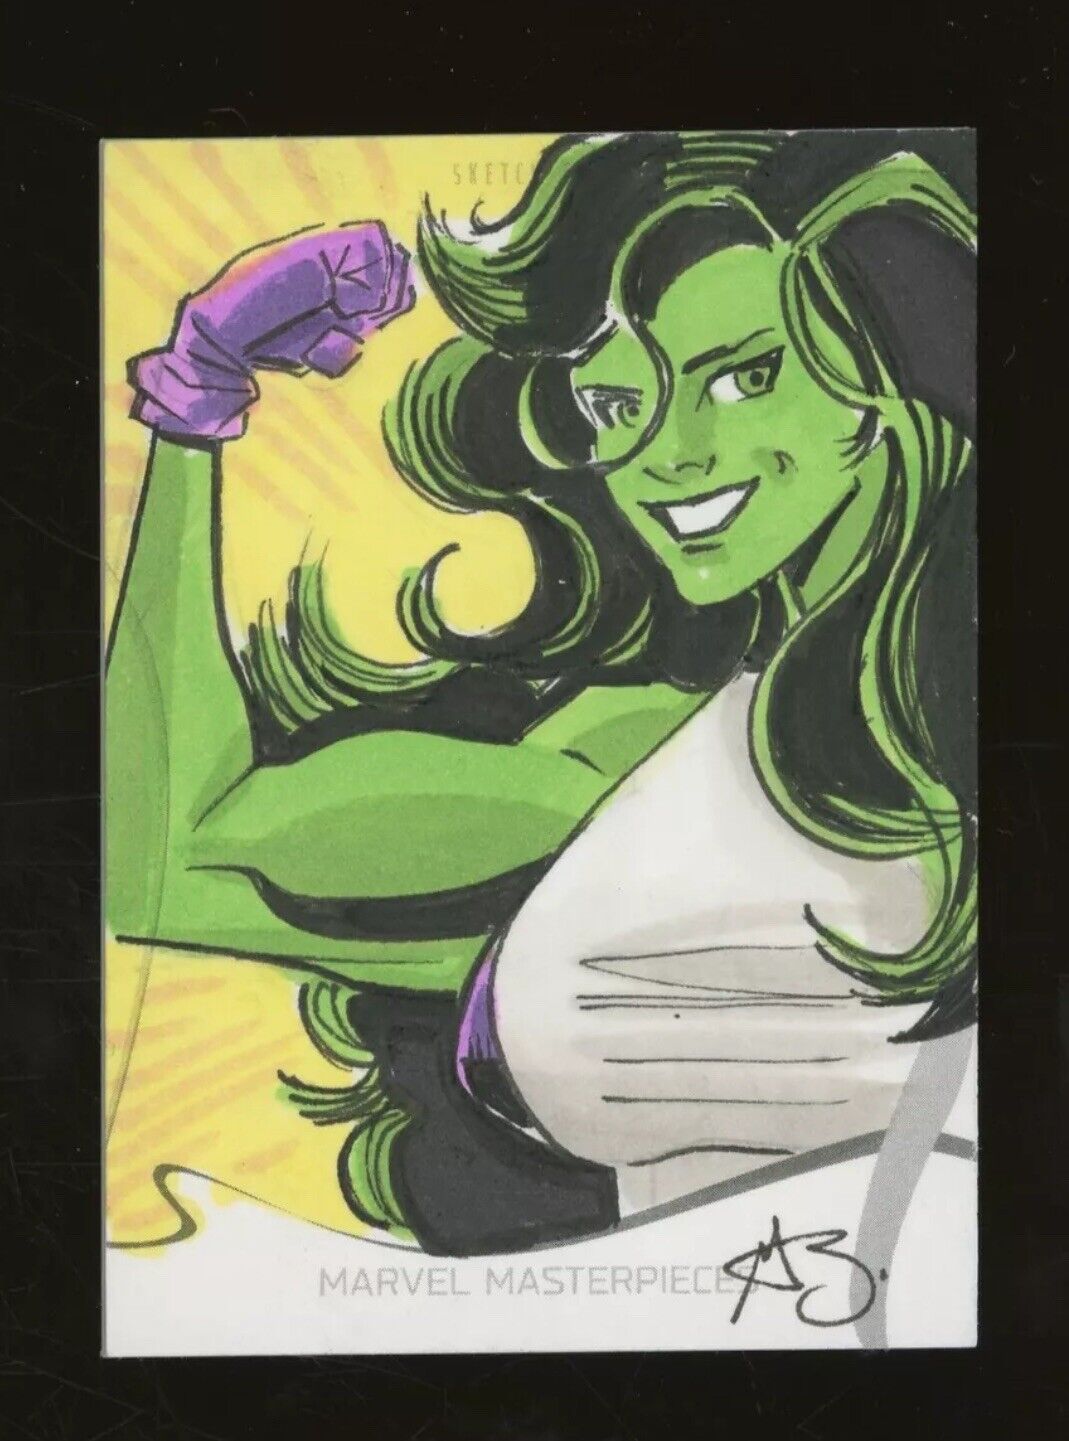 2022 Skybox Marvel Masterpieces She-Hulk Sketch Card By Greg Kirkpatrick 1/1